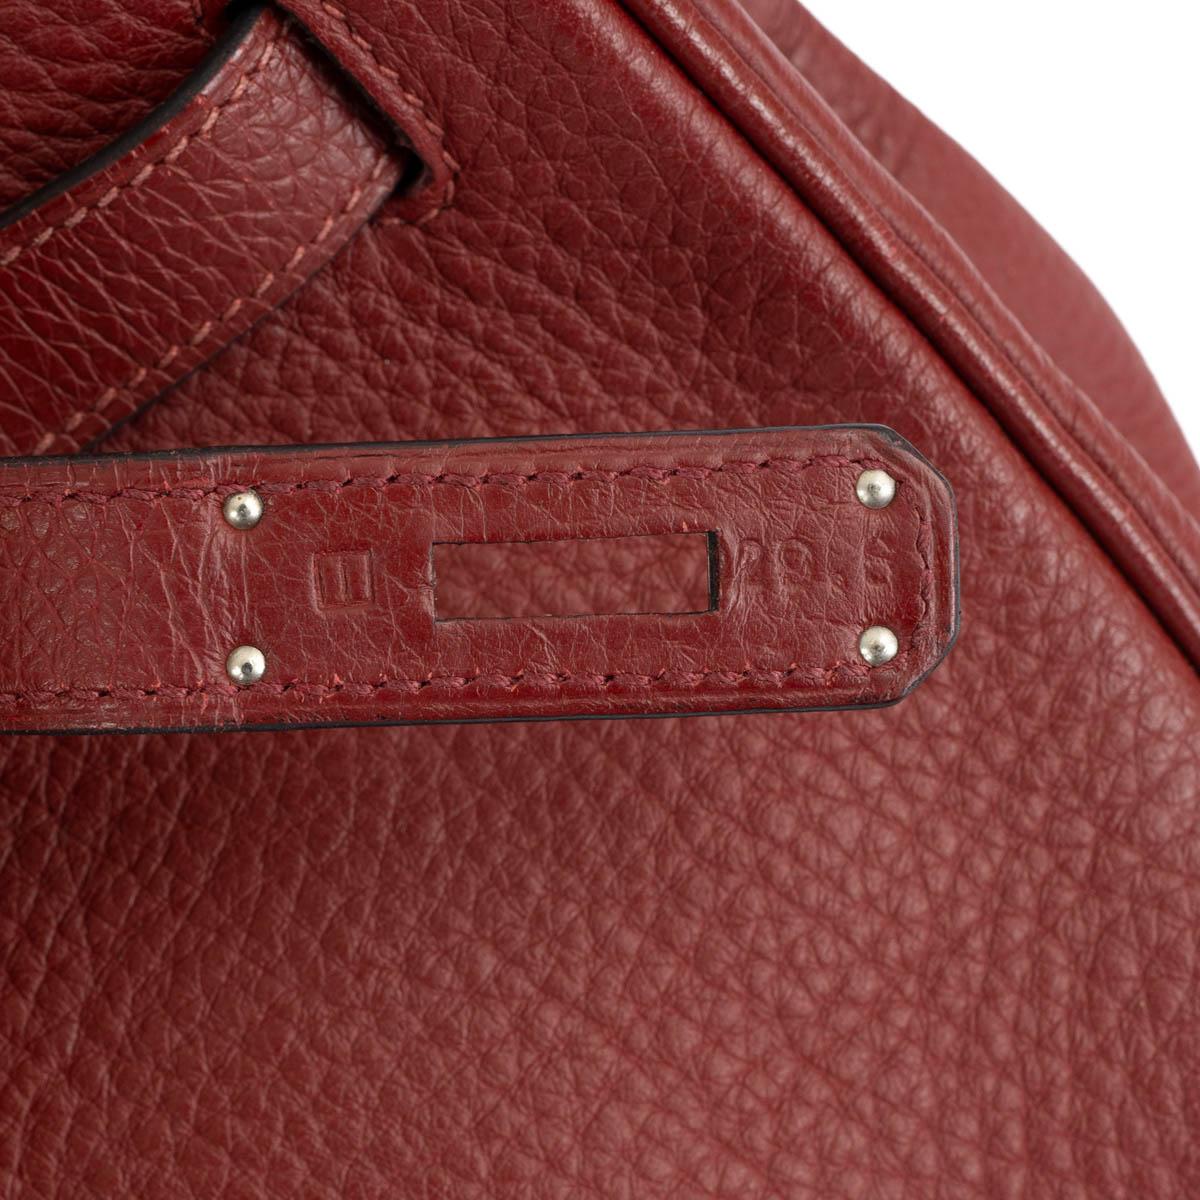 HERMES Rouge H burgundy Clemence leather BIRKIN 35 Bag w Palladium 3